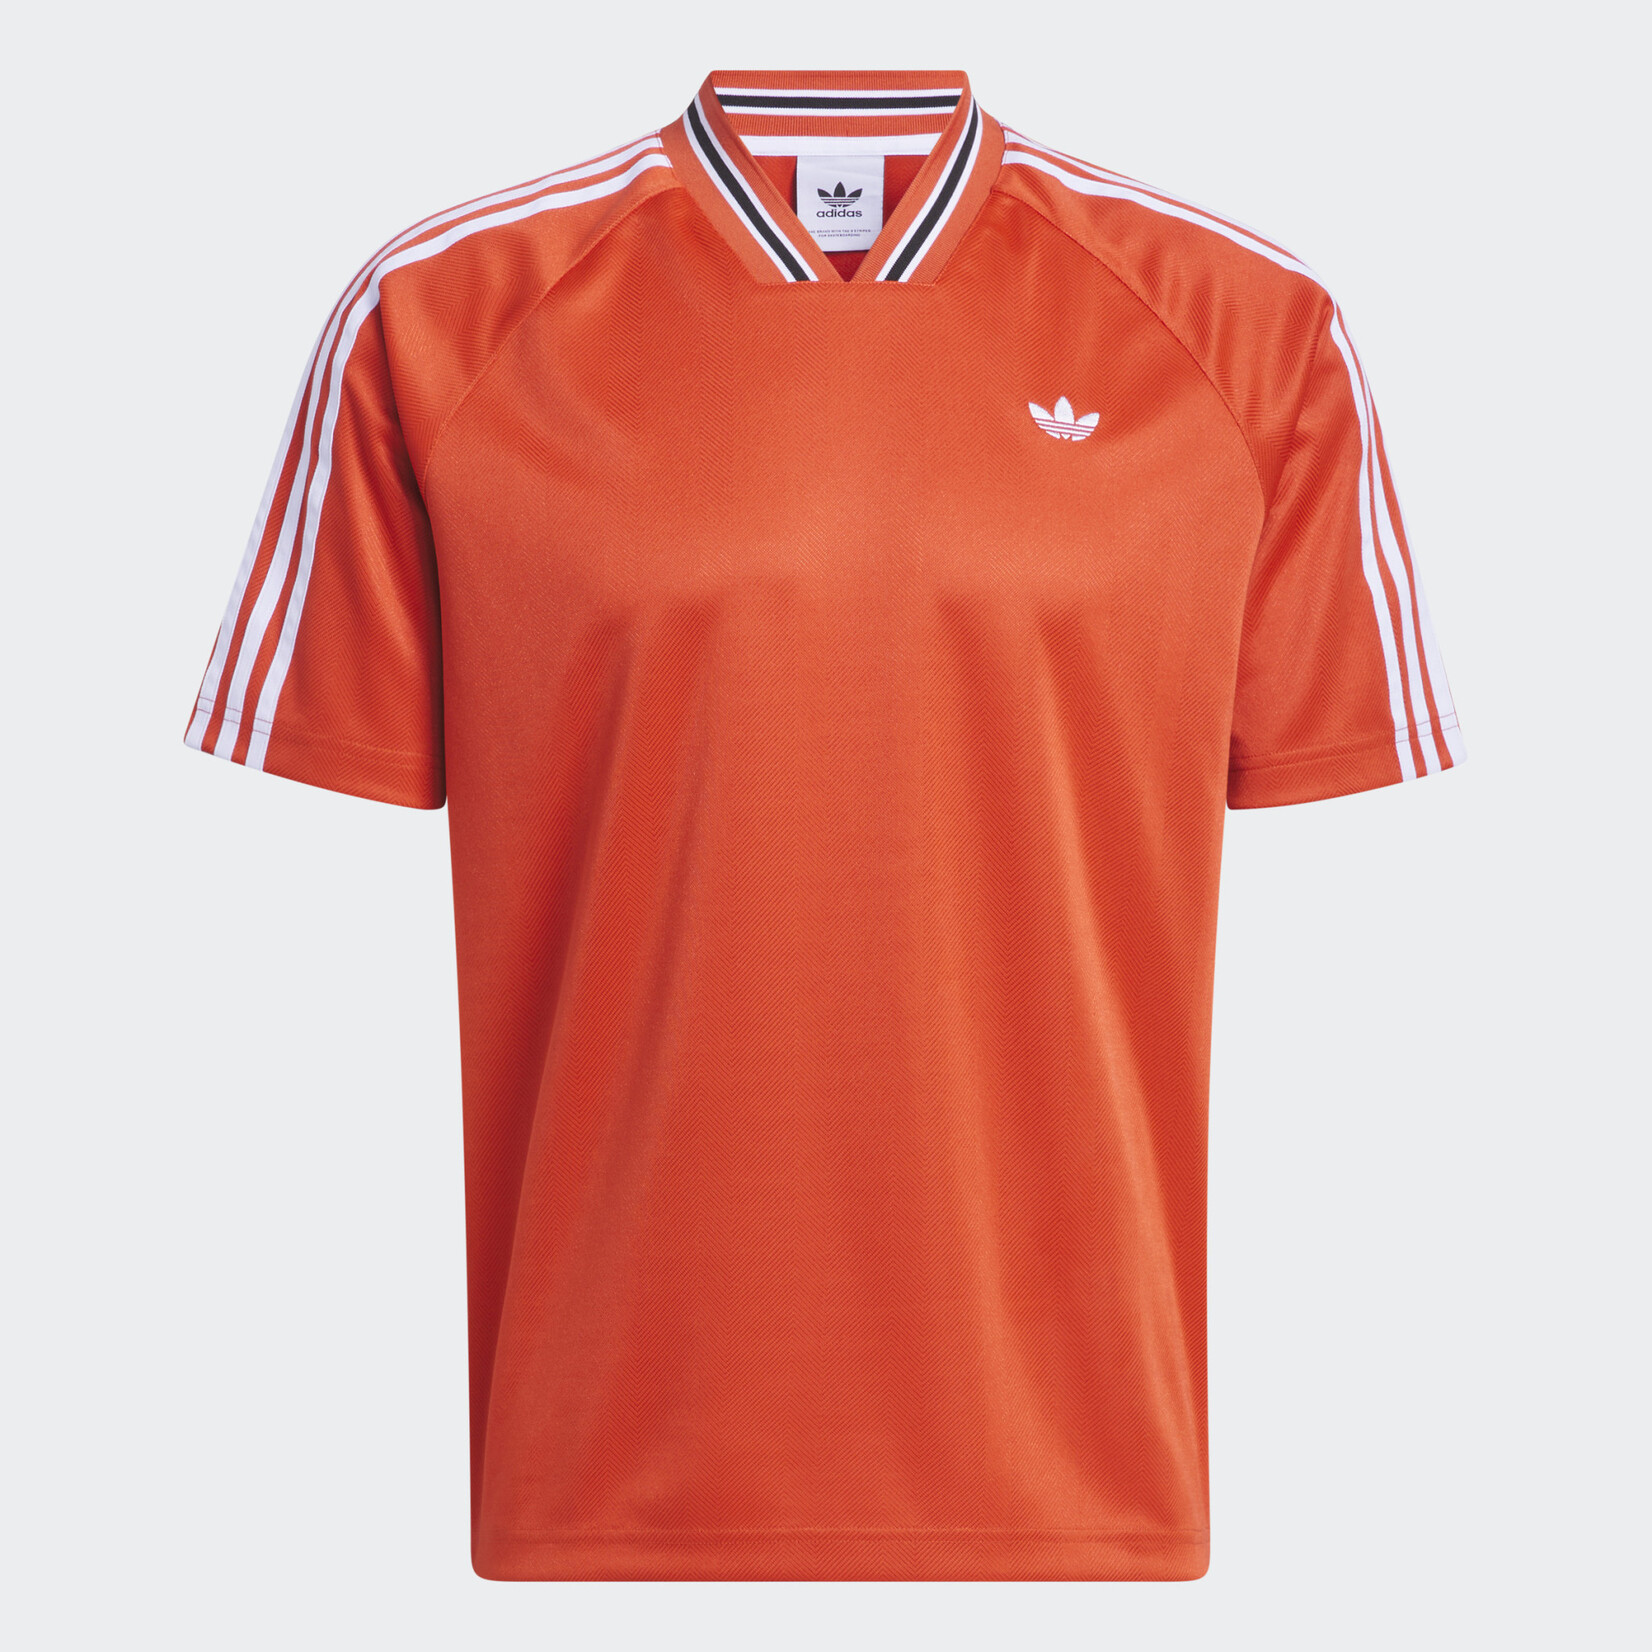 Adidas Herringbone Jersey Orange